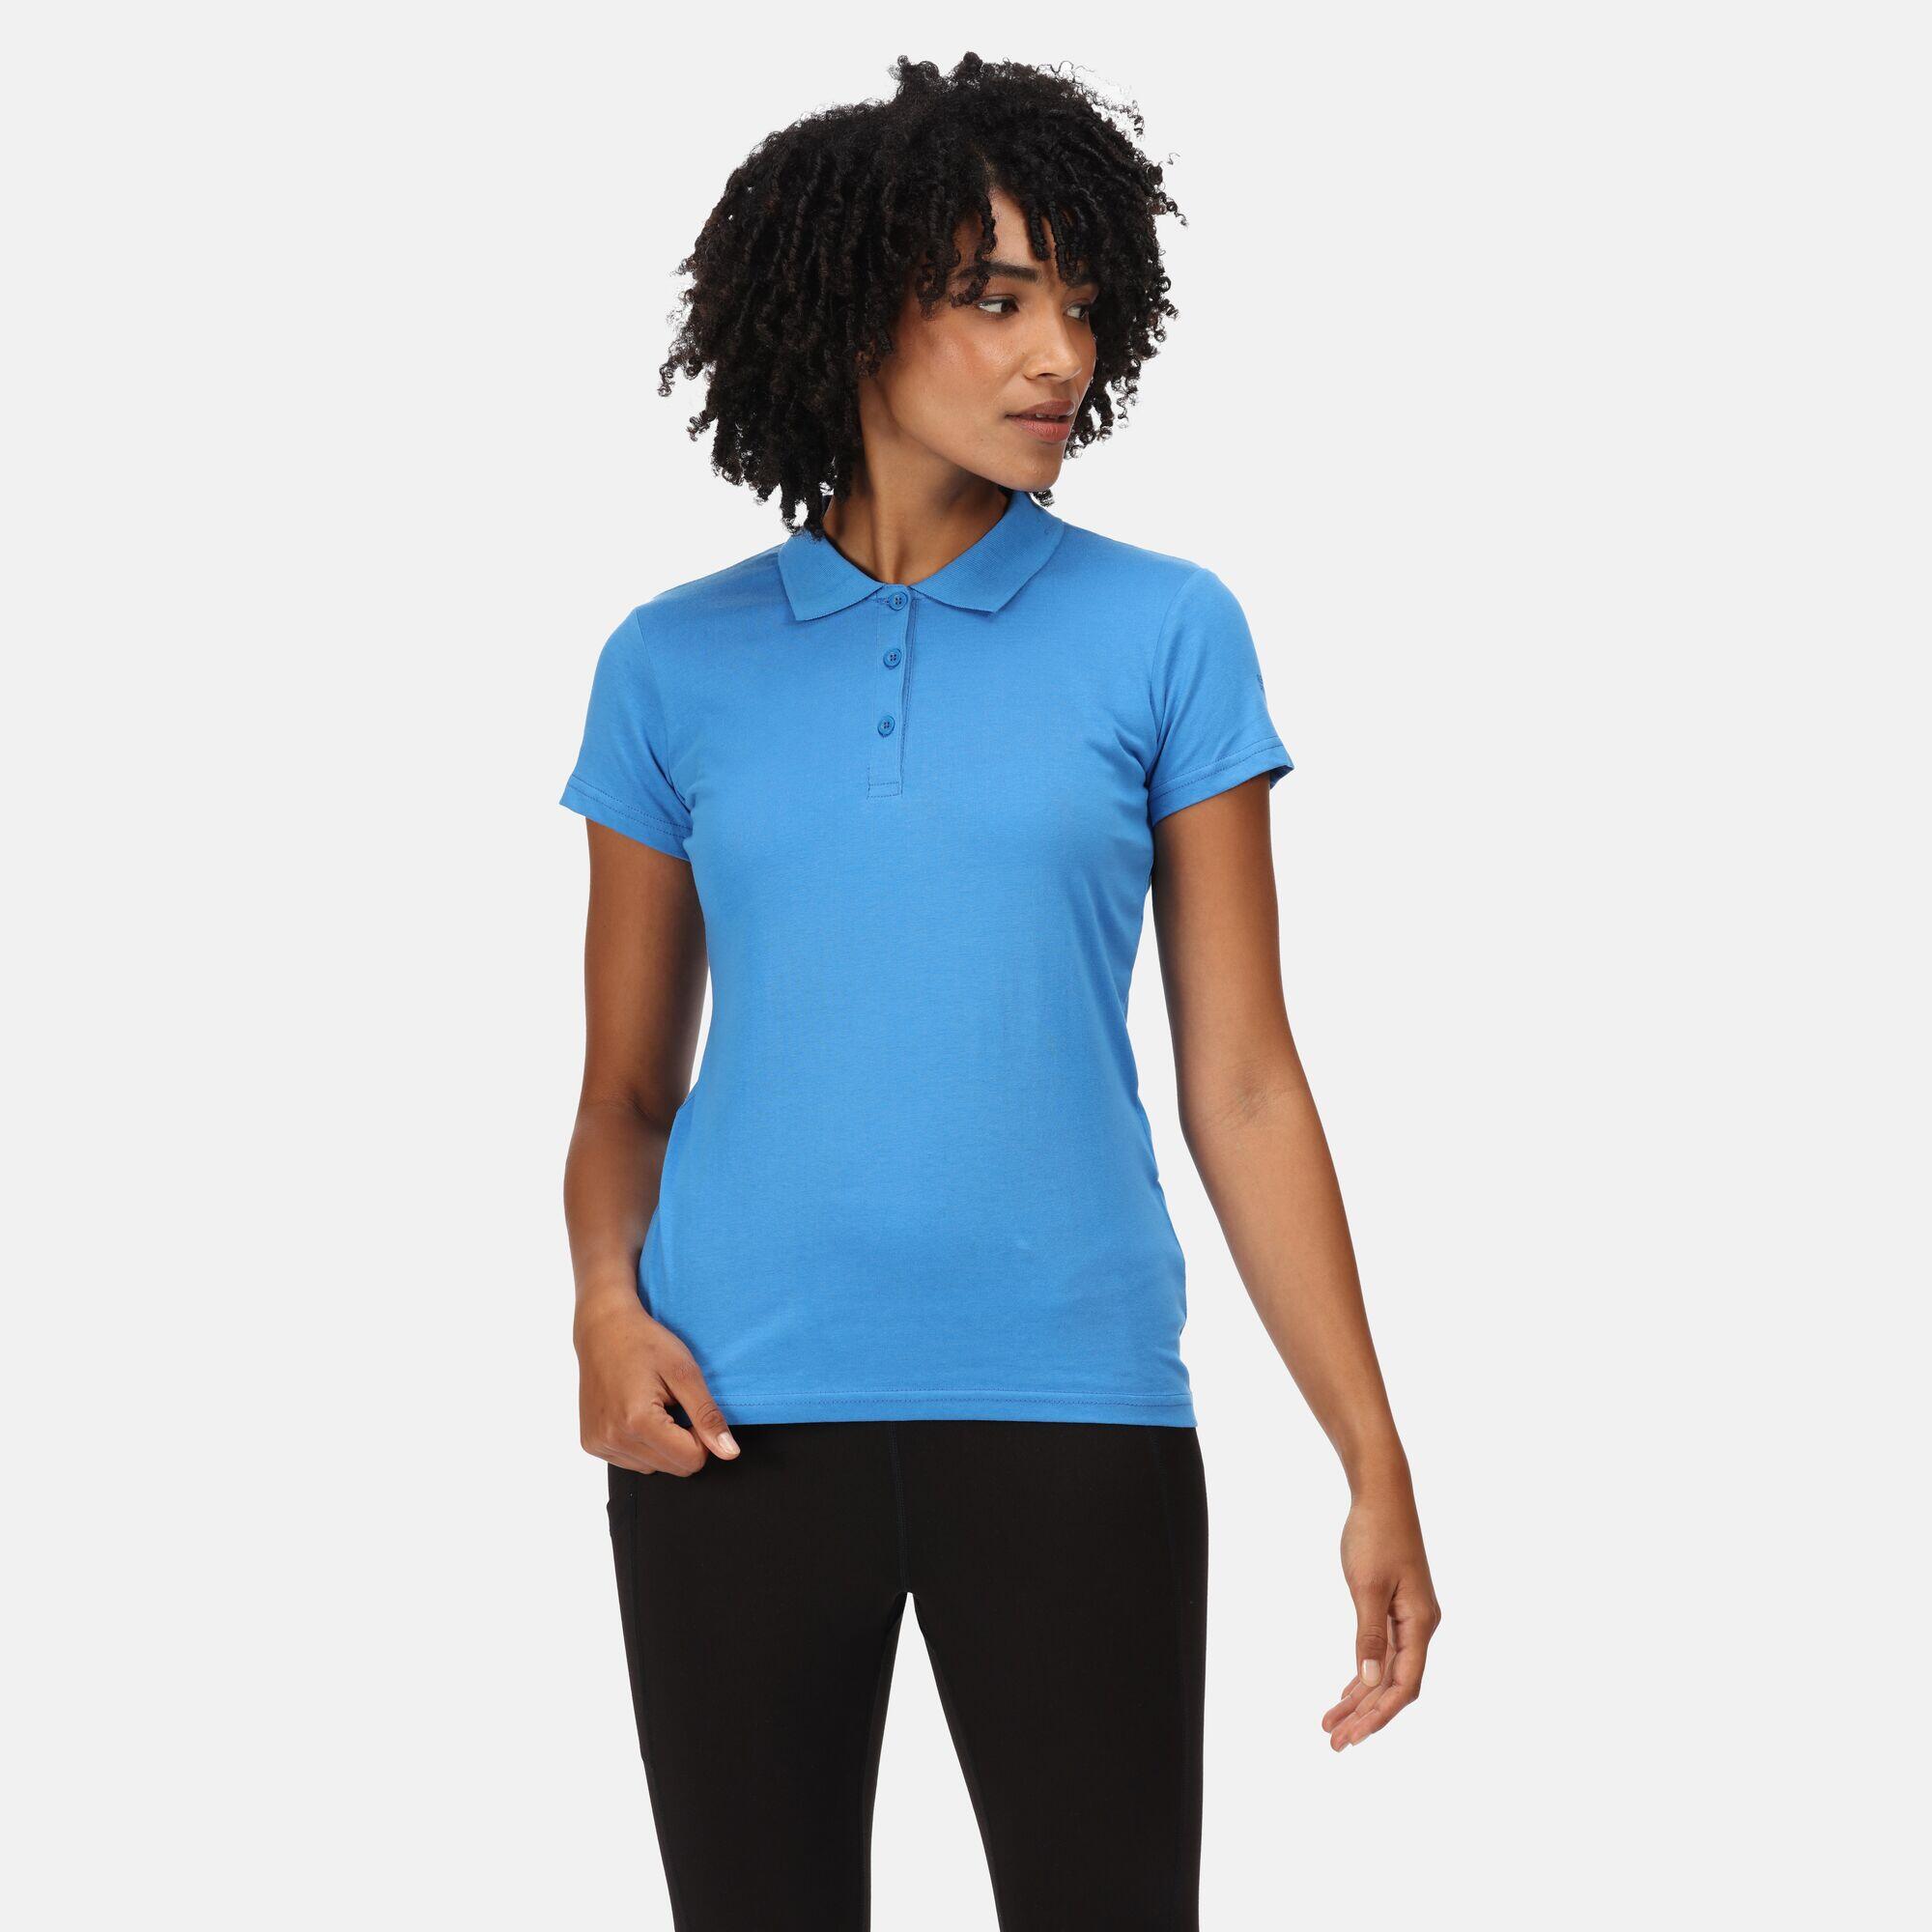 REGATTA Sinton Women's Fitness Short Sleeve T-Shirt - Sonic Blue